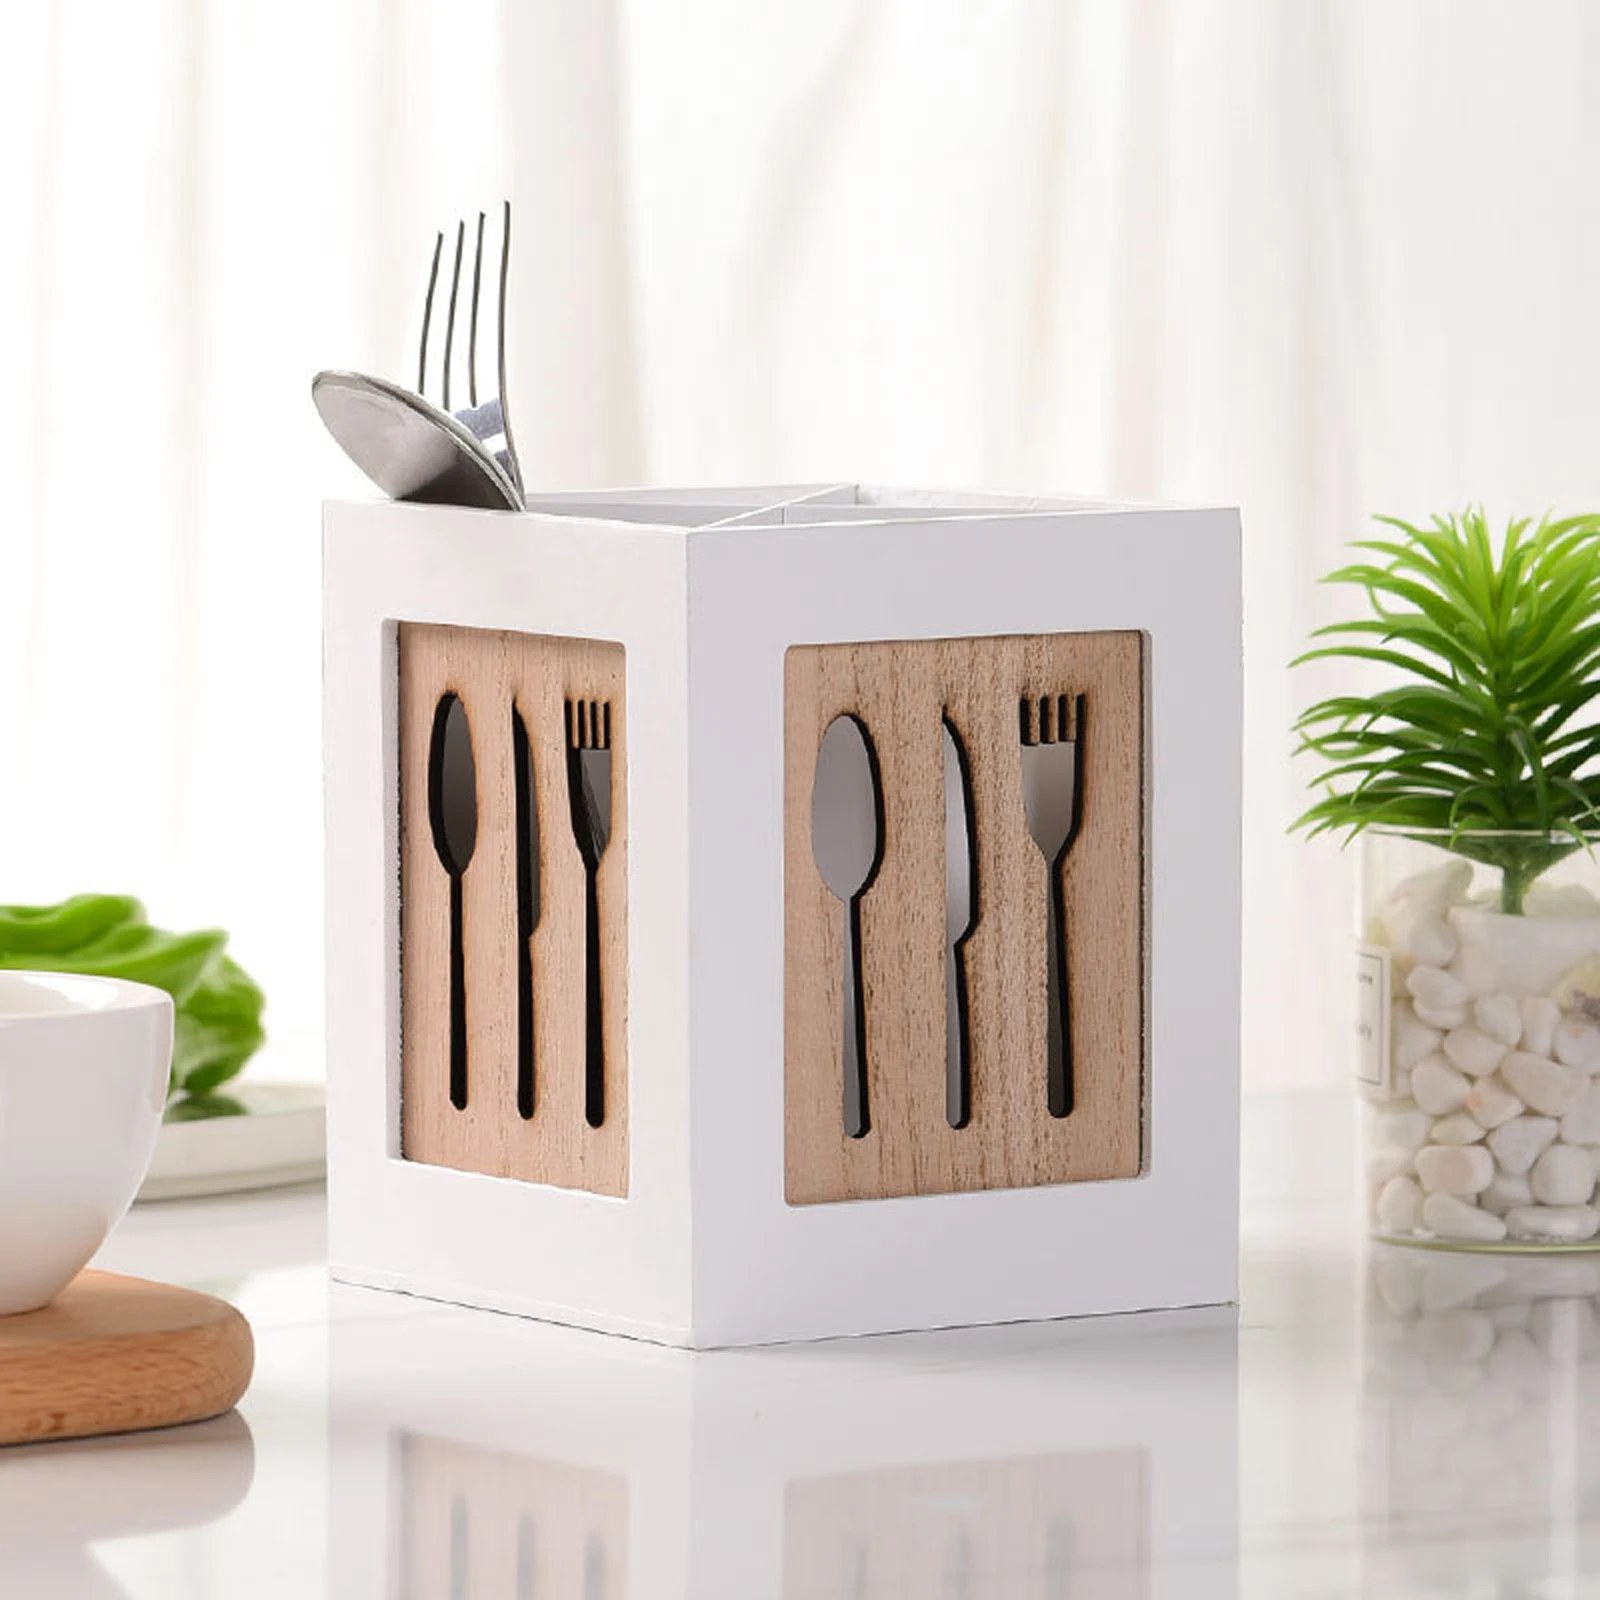 

Tableware Storage Utensil Organizer Layered Look Nice Sturdy To Use Bamboo Kitchen Supply Chopsticks Cutlery Basket